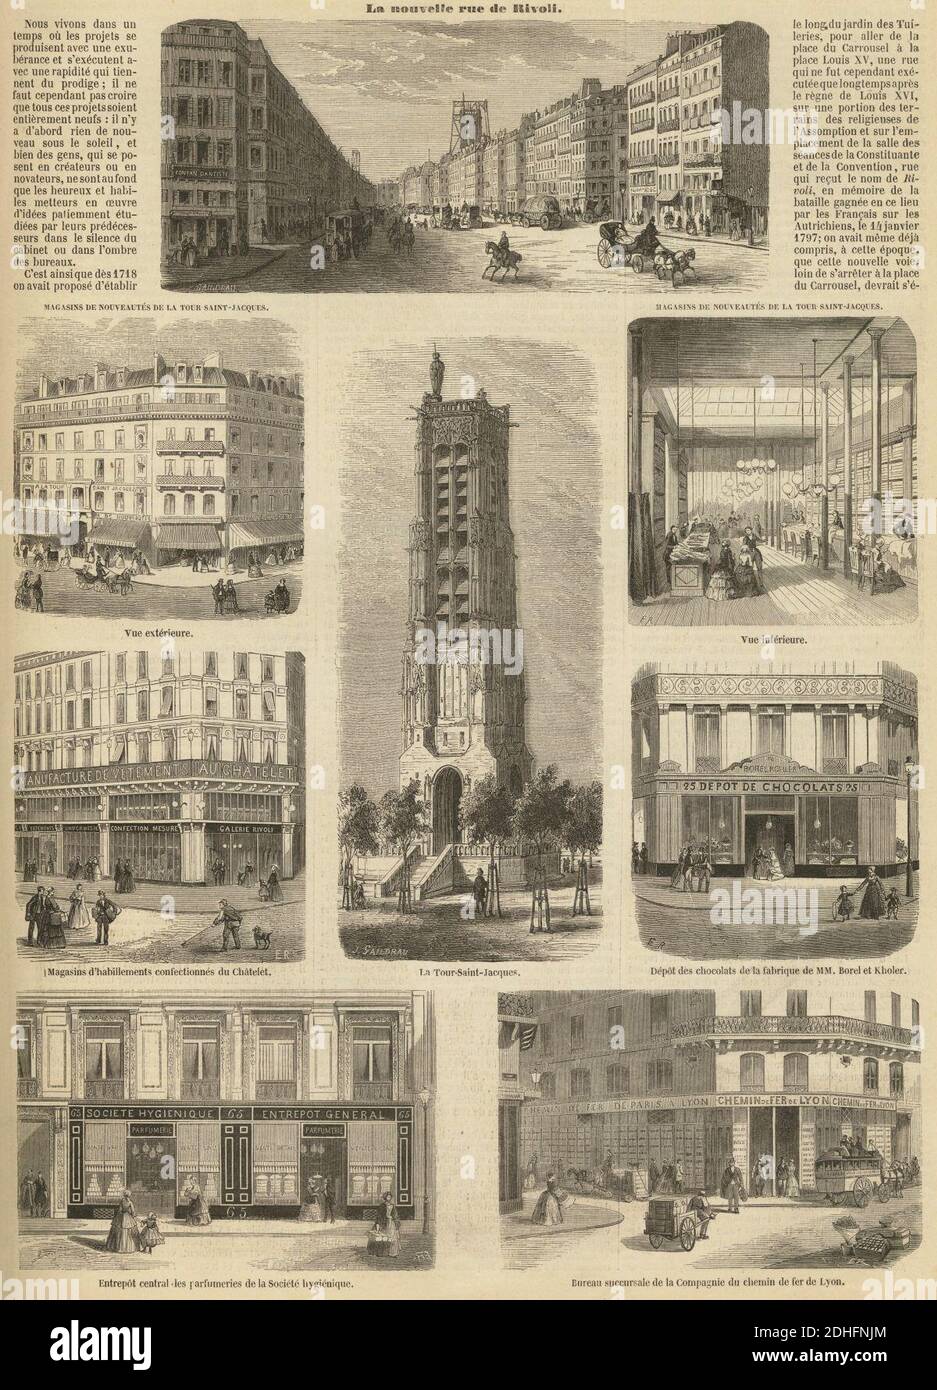 La nouvelle rue de Rivoli, 1854. Stock Photo